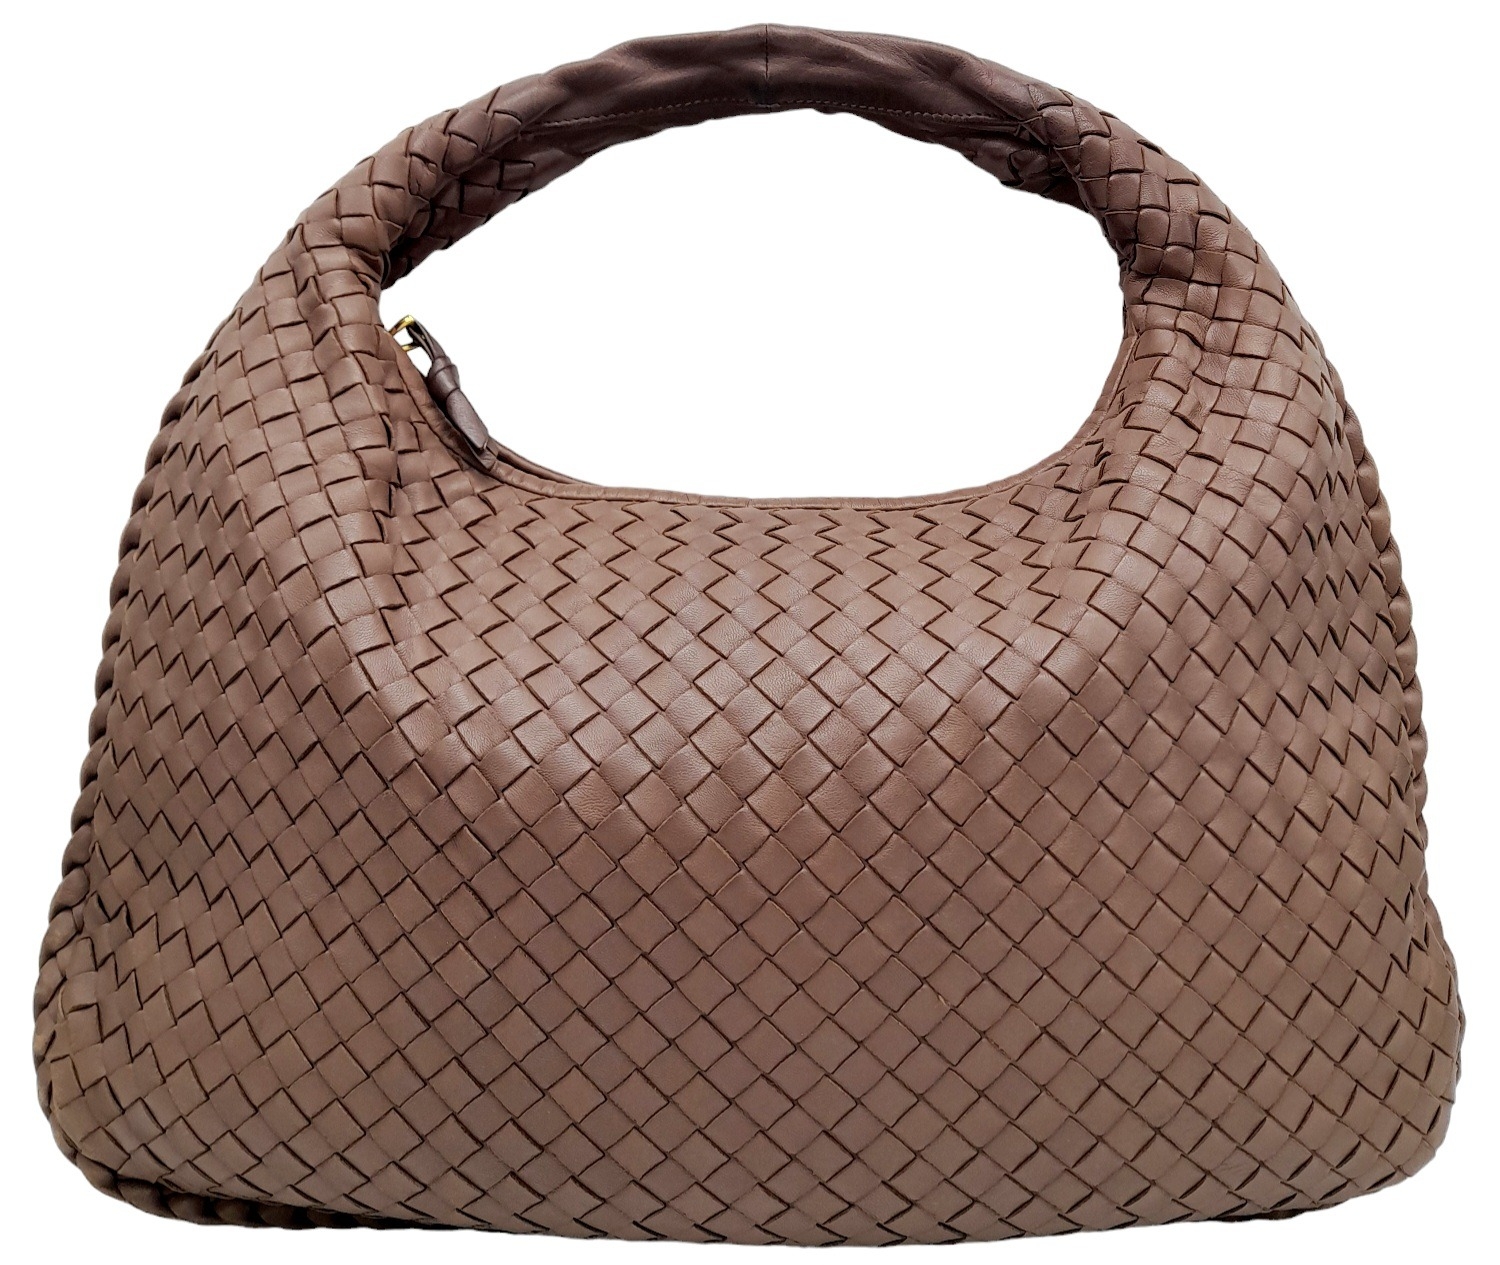 A Bottega Veneta Brown Bag. Intrecciato leather exterior with gold-toned hardware, single handle/